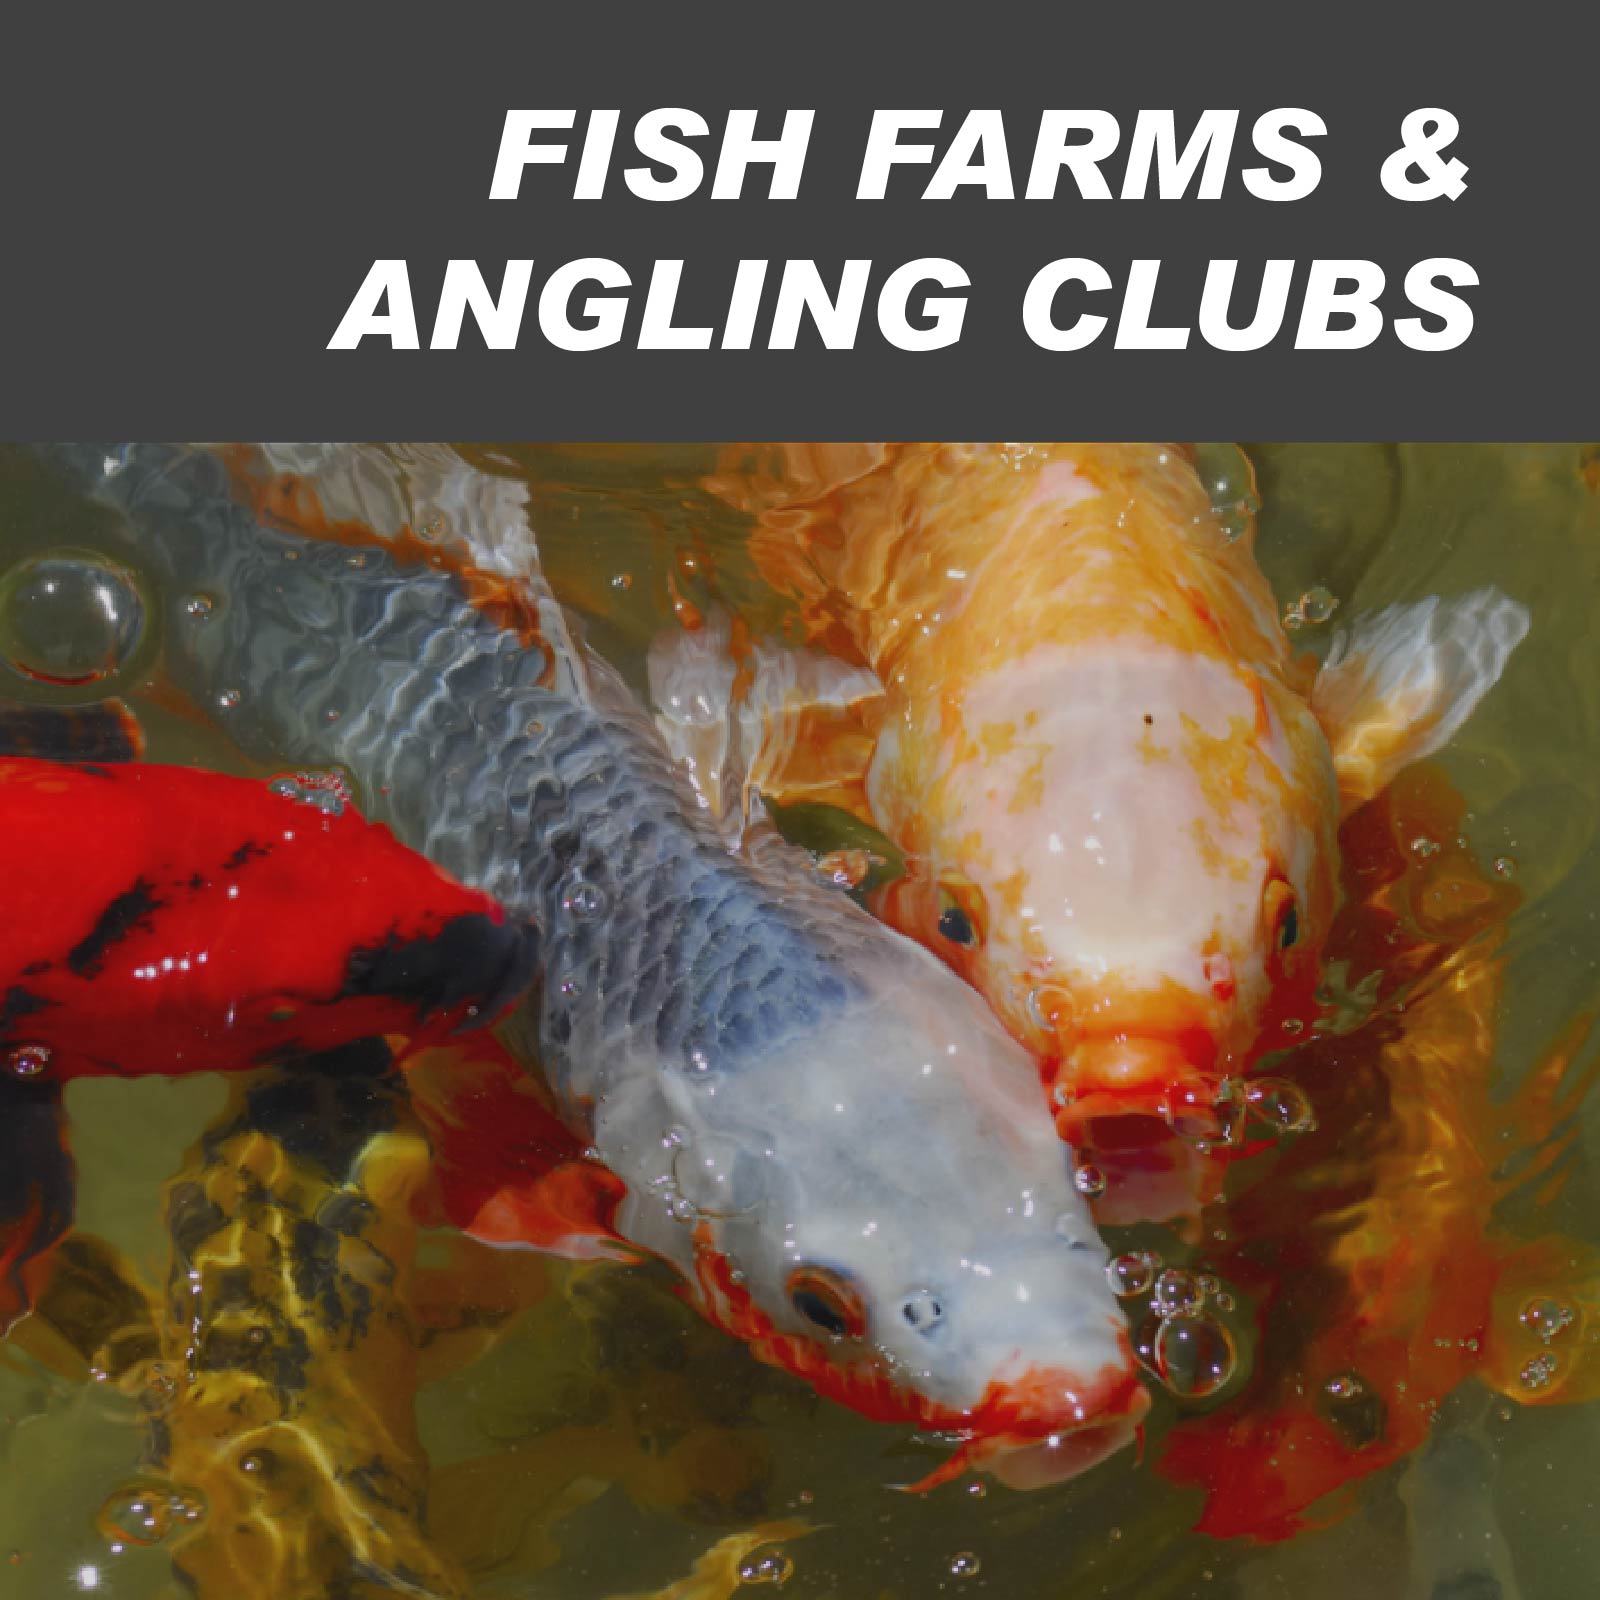 Fish Farms & Angling Club Treatments